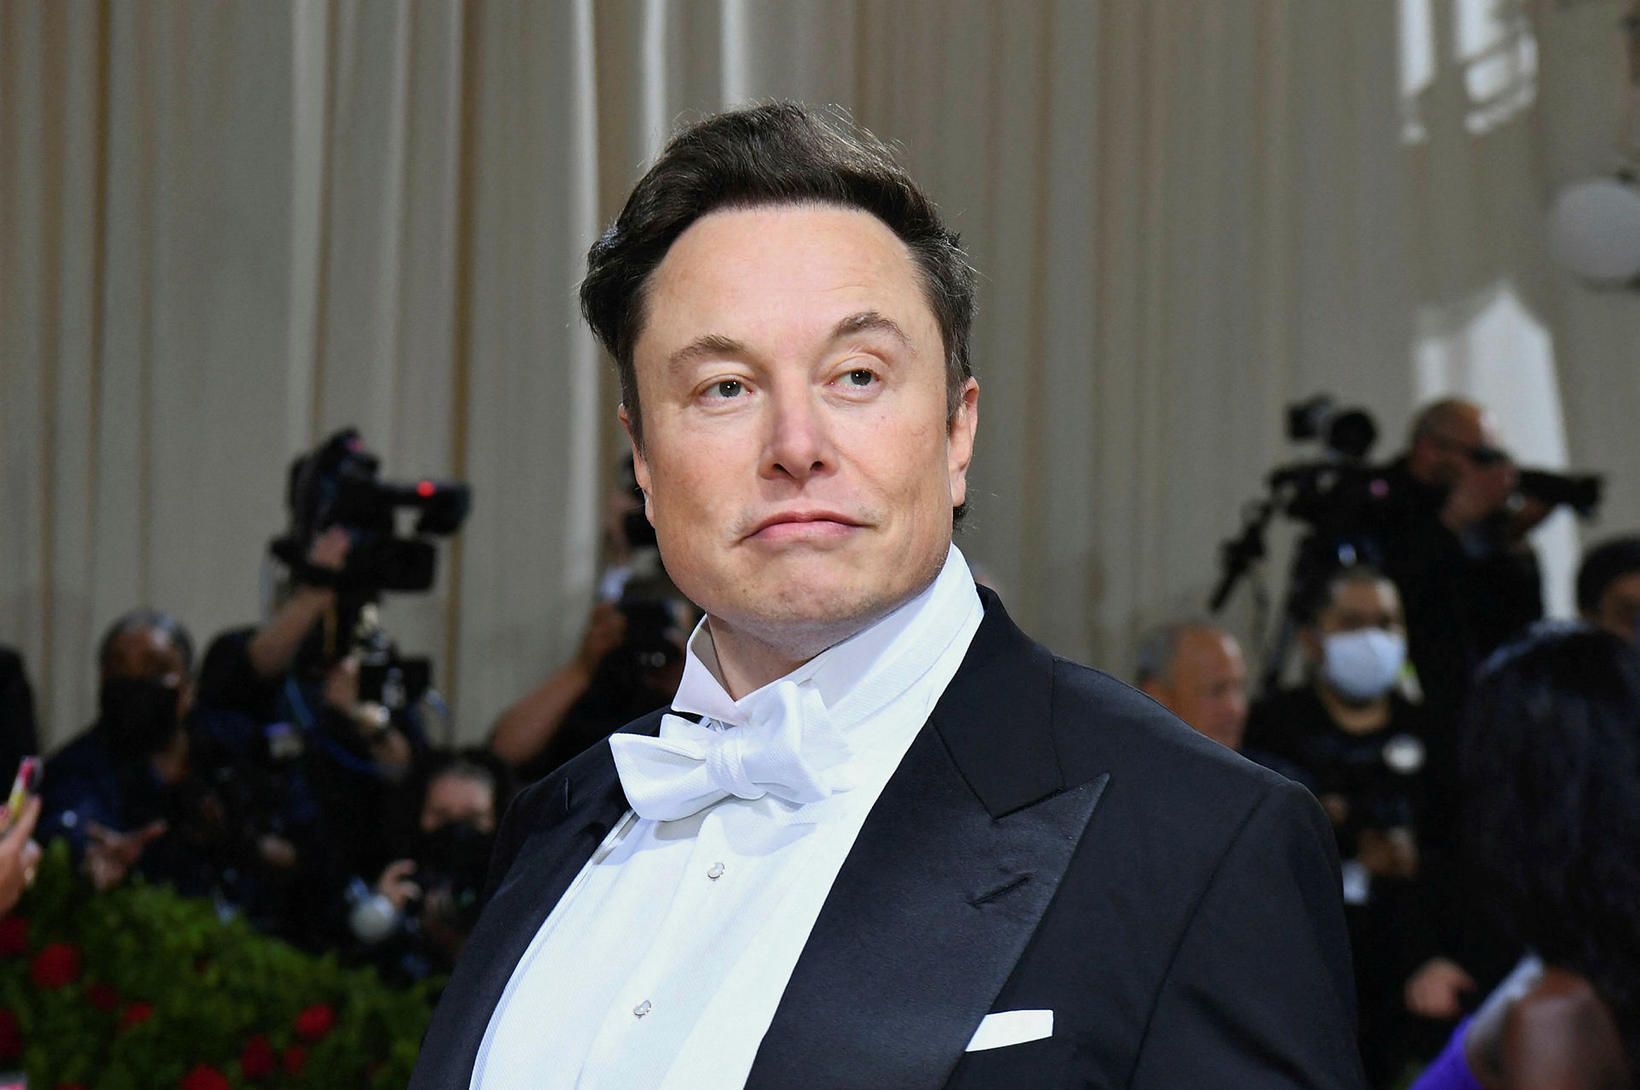 Elon Musk eignast sitt 12. barn